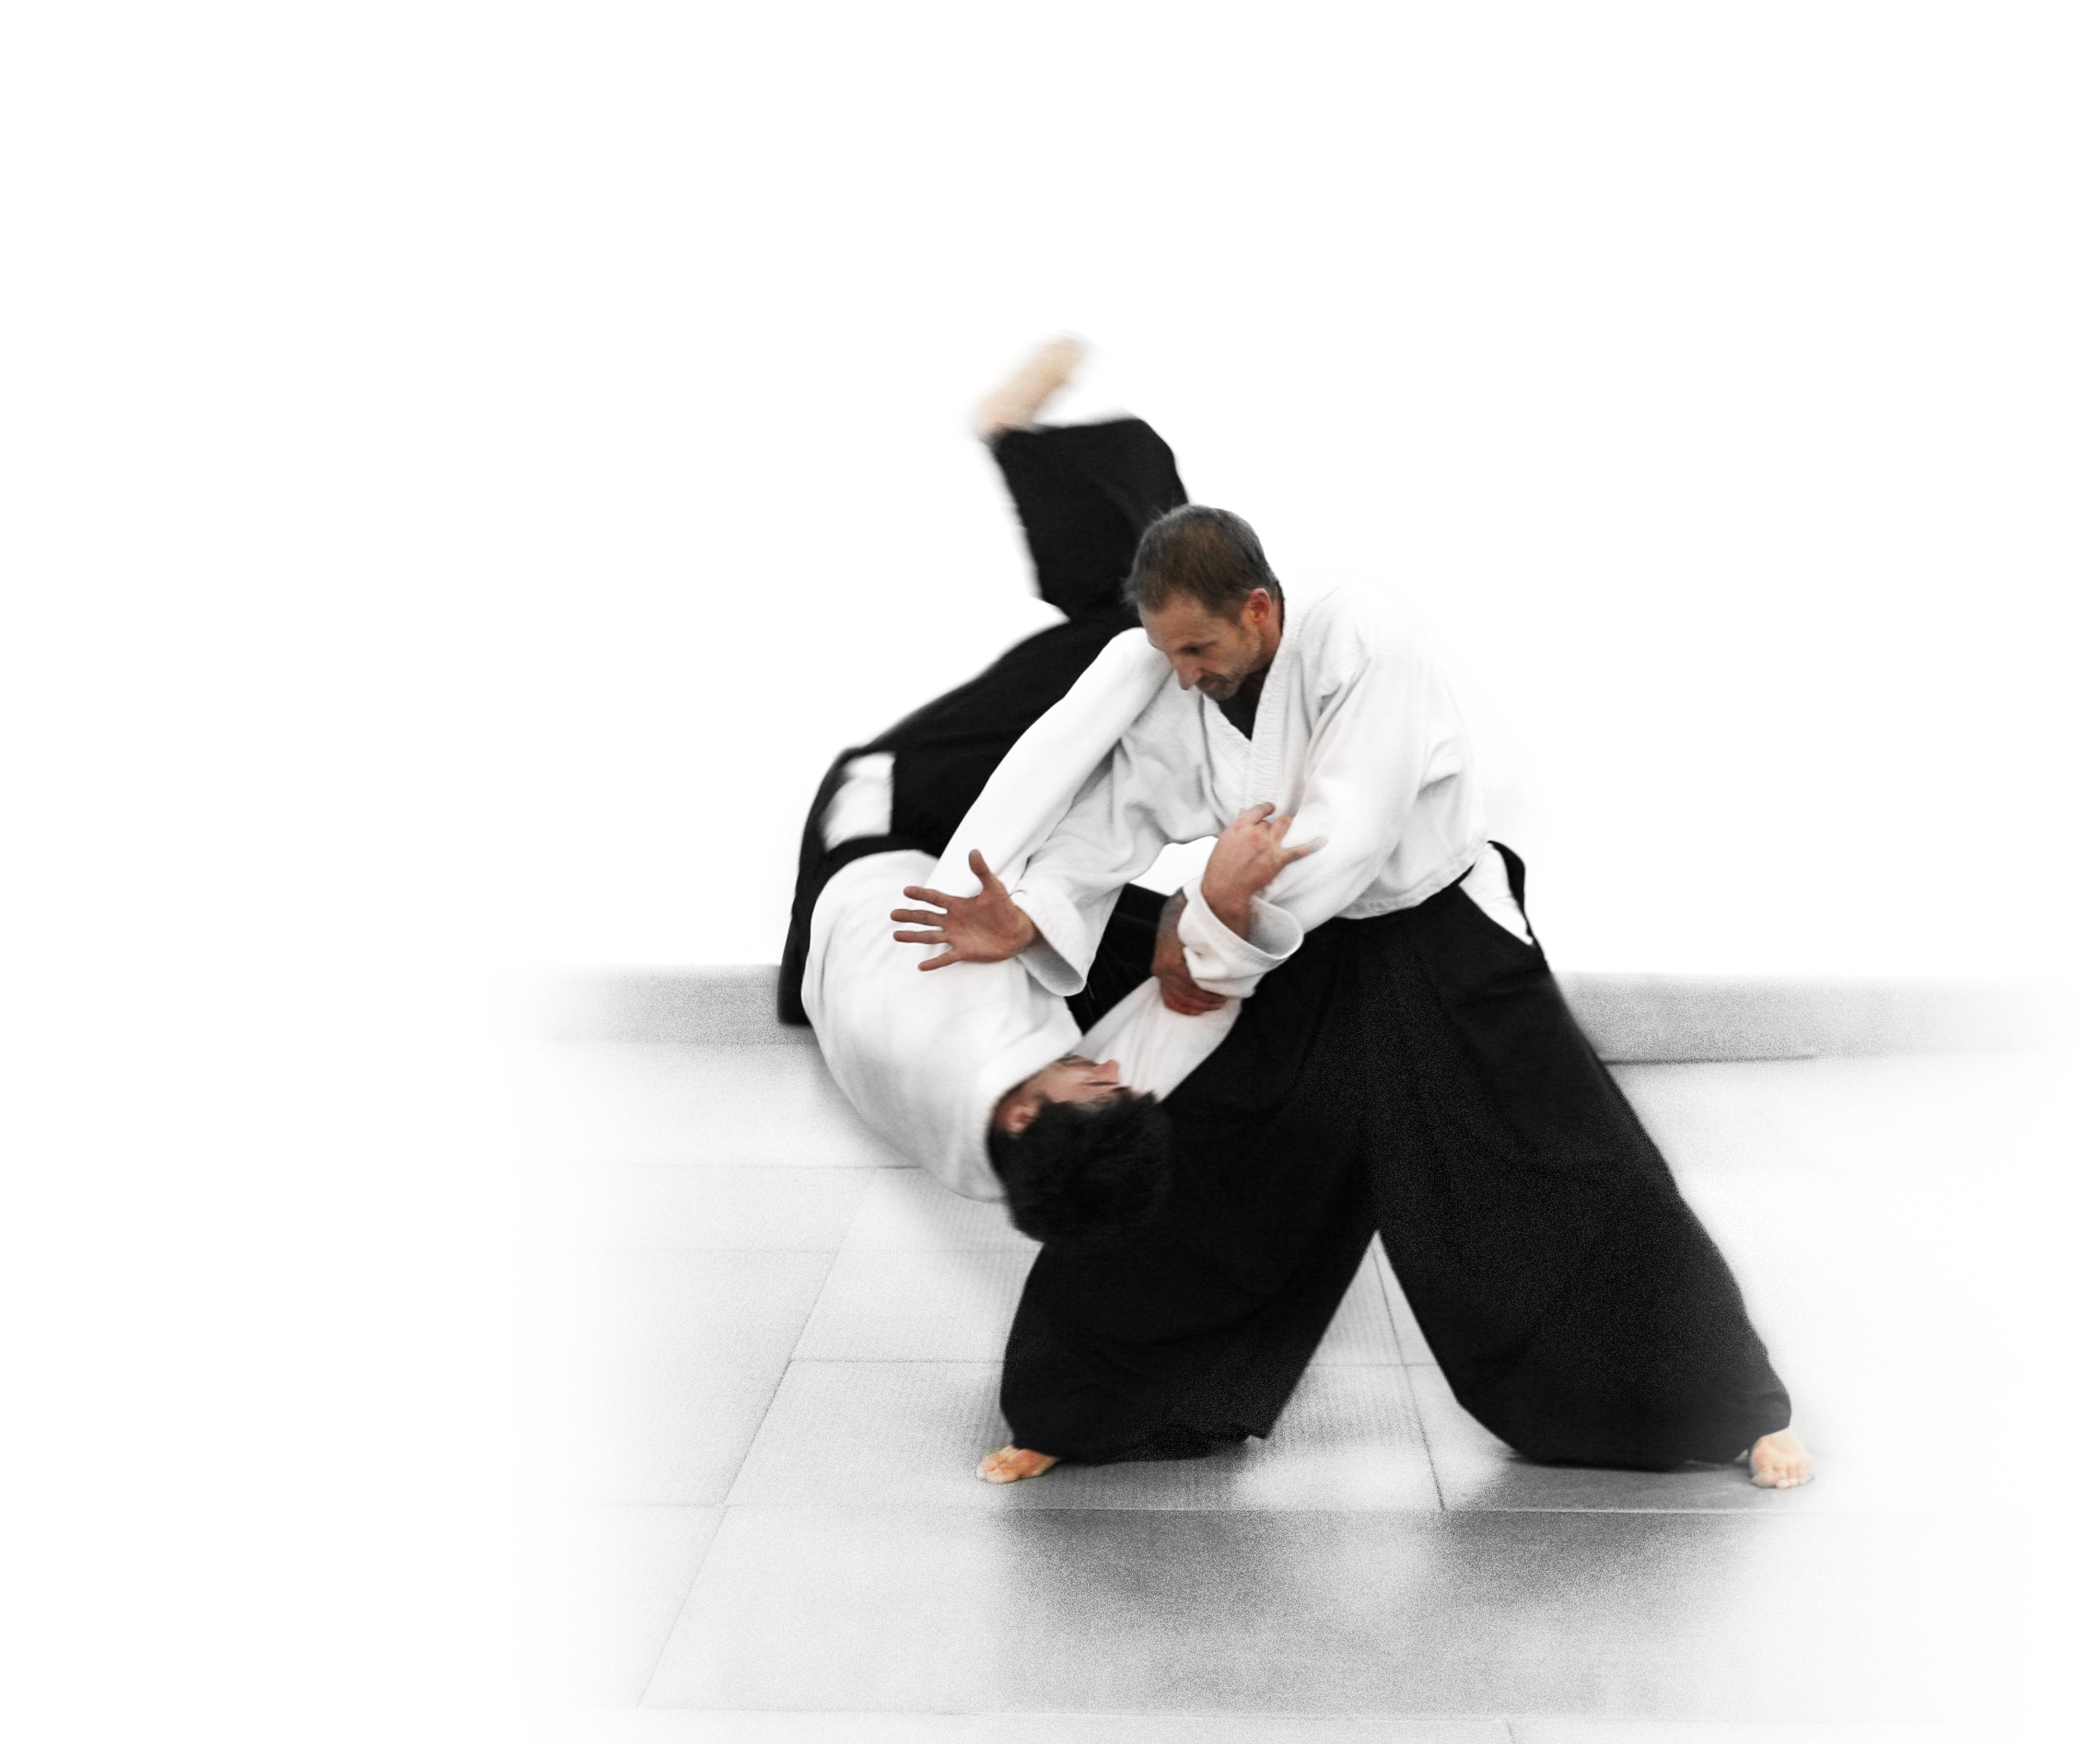 fond d'écran d'aikido,aikido,kinomichi,arts martiaux,hapkido